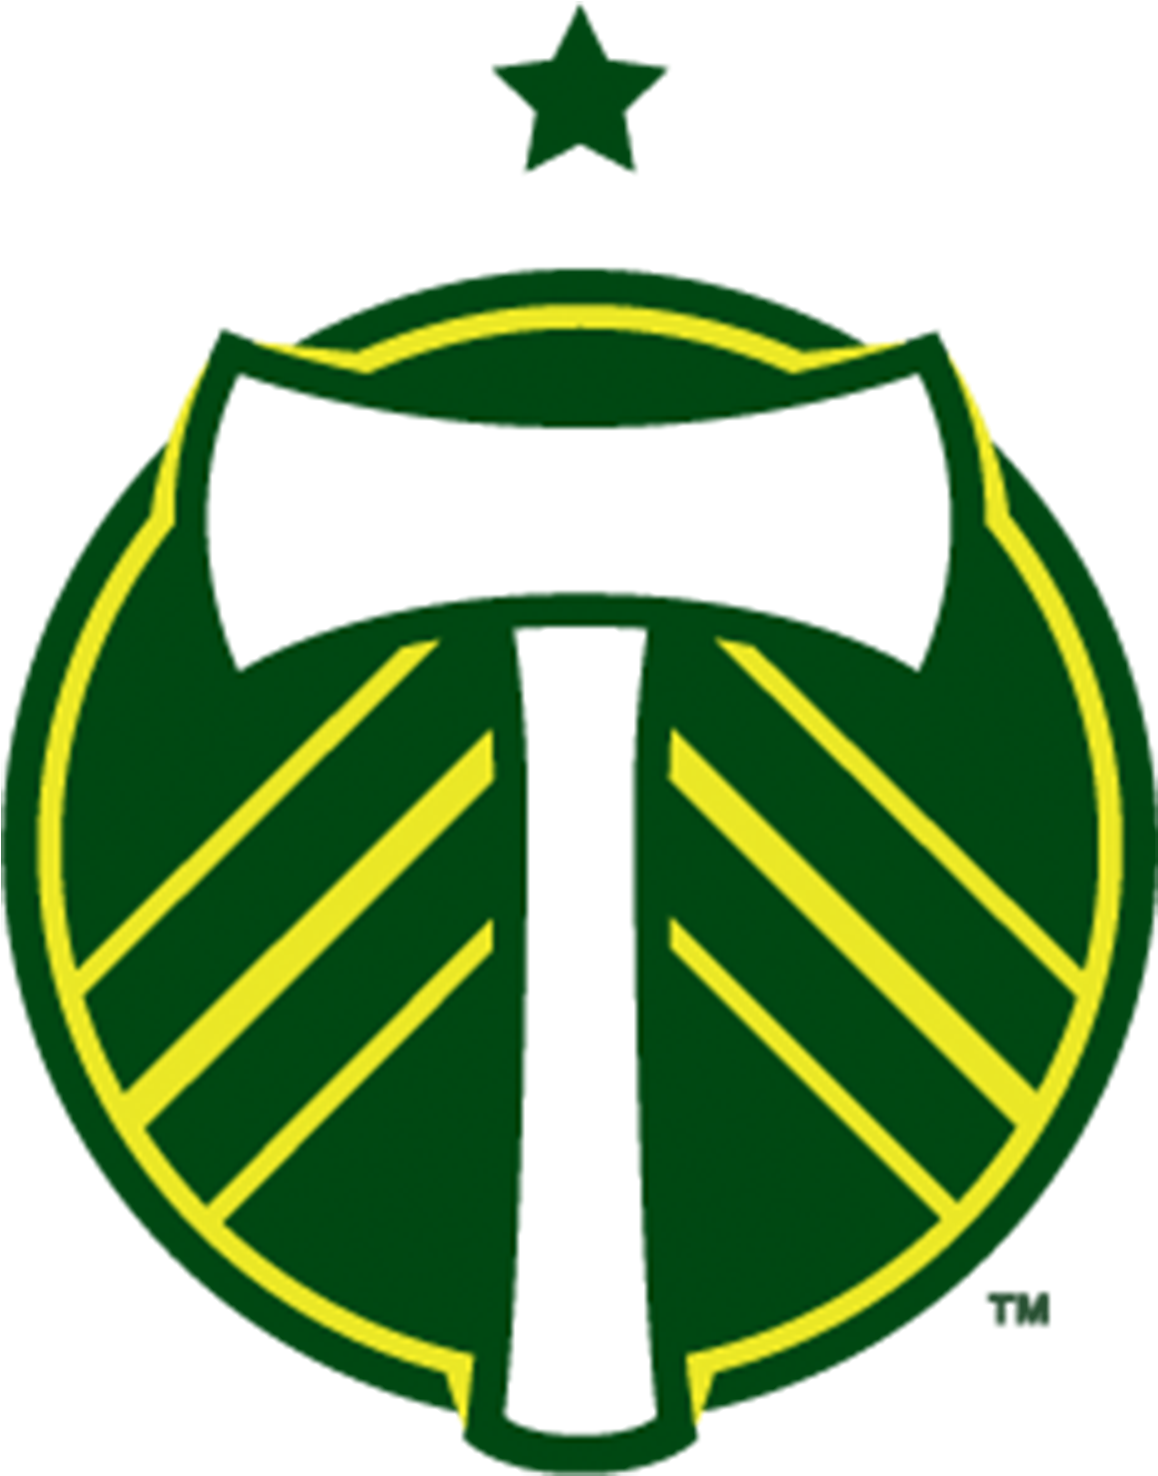 Previous - Portland Timbers Logo Star (1227x1500)